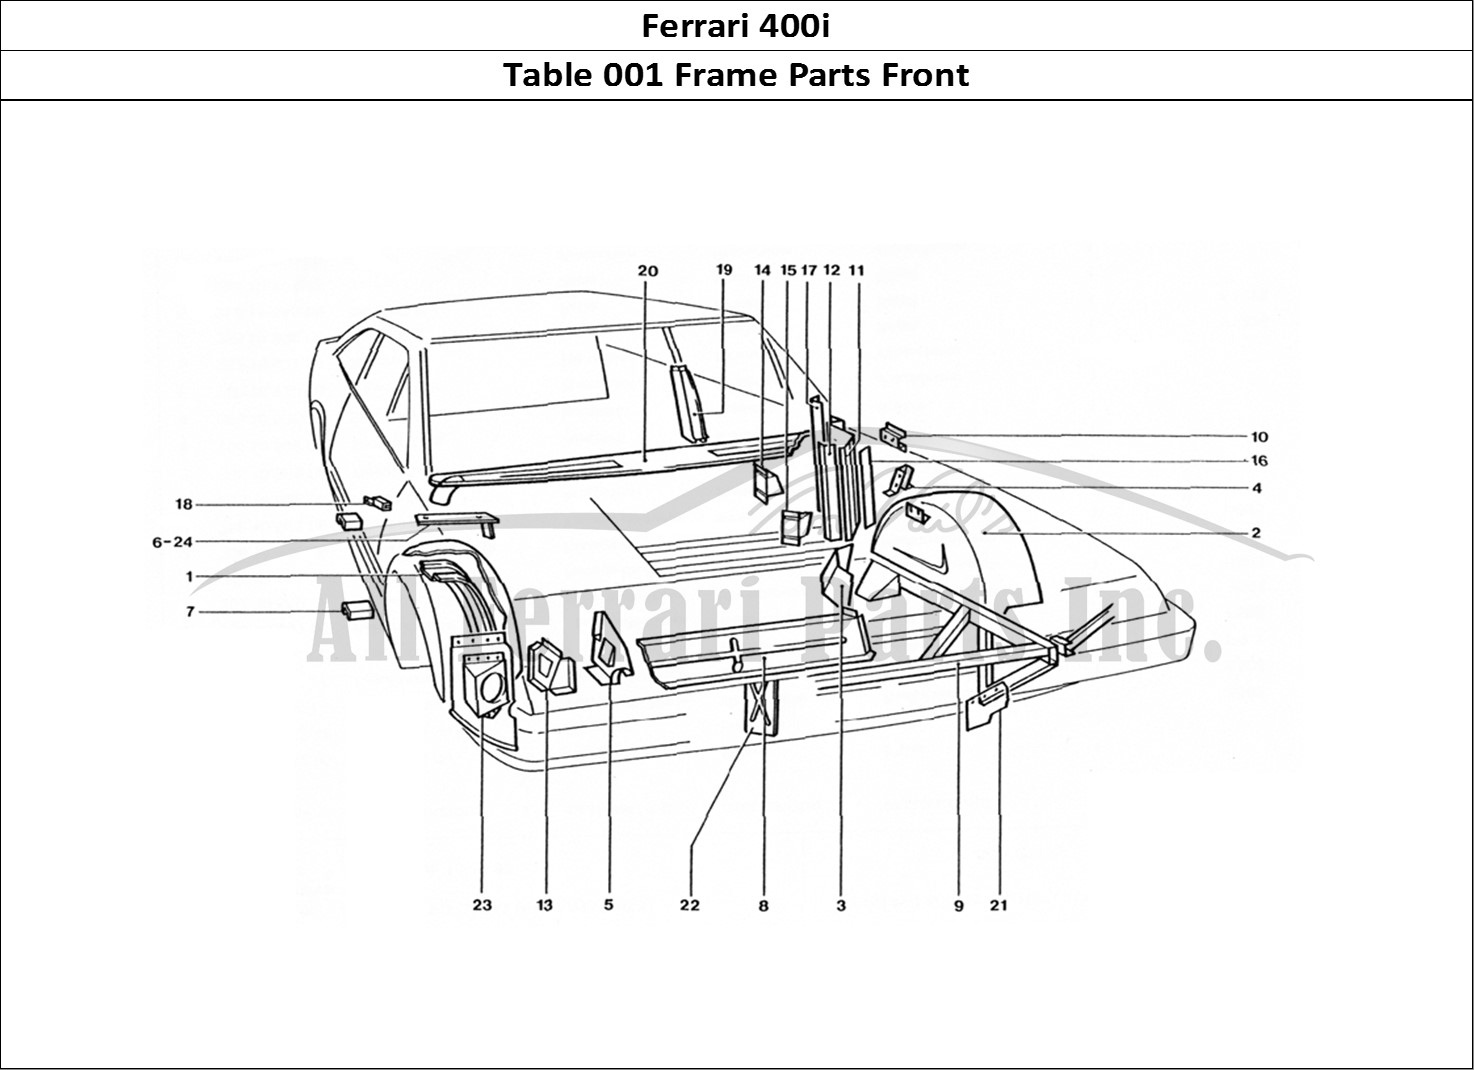 Ferrari Parts Ferrari 400 GT (Coachwork) Page 001 Front panel & Sheilds